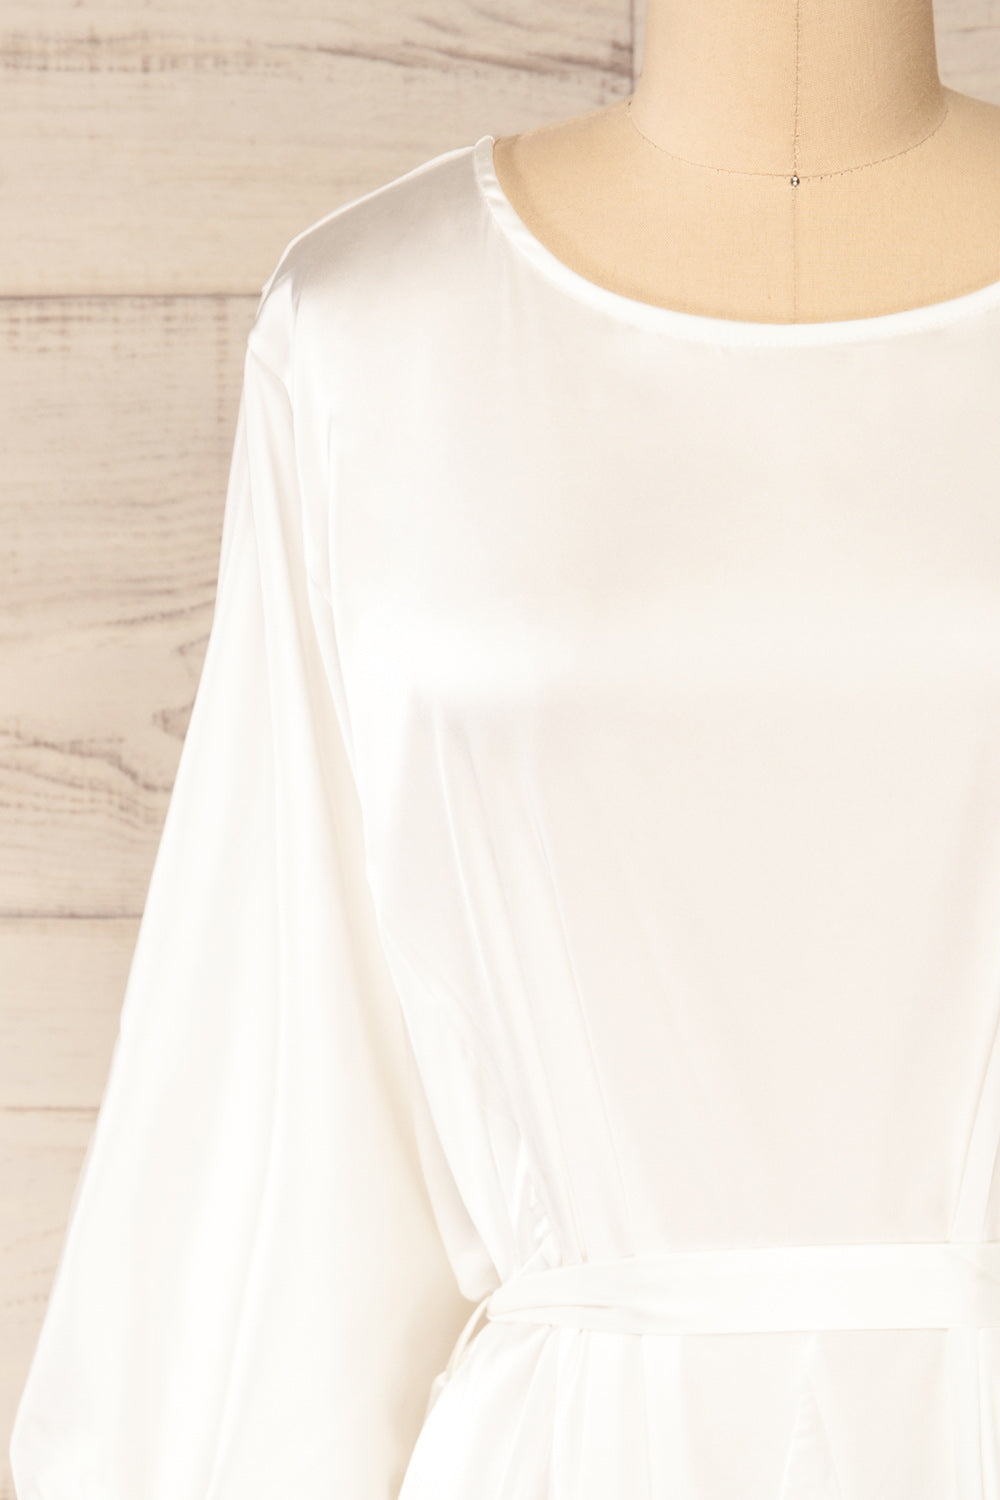 Isobel White Short Satin Dress with 3/4 Sleeves | La petite garçonne front close-up